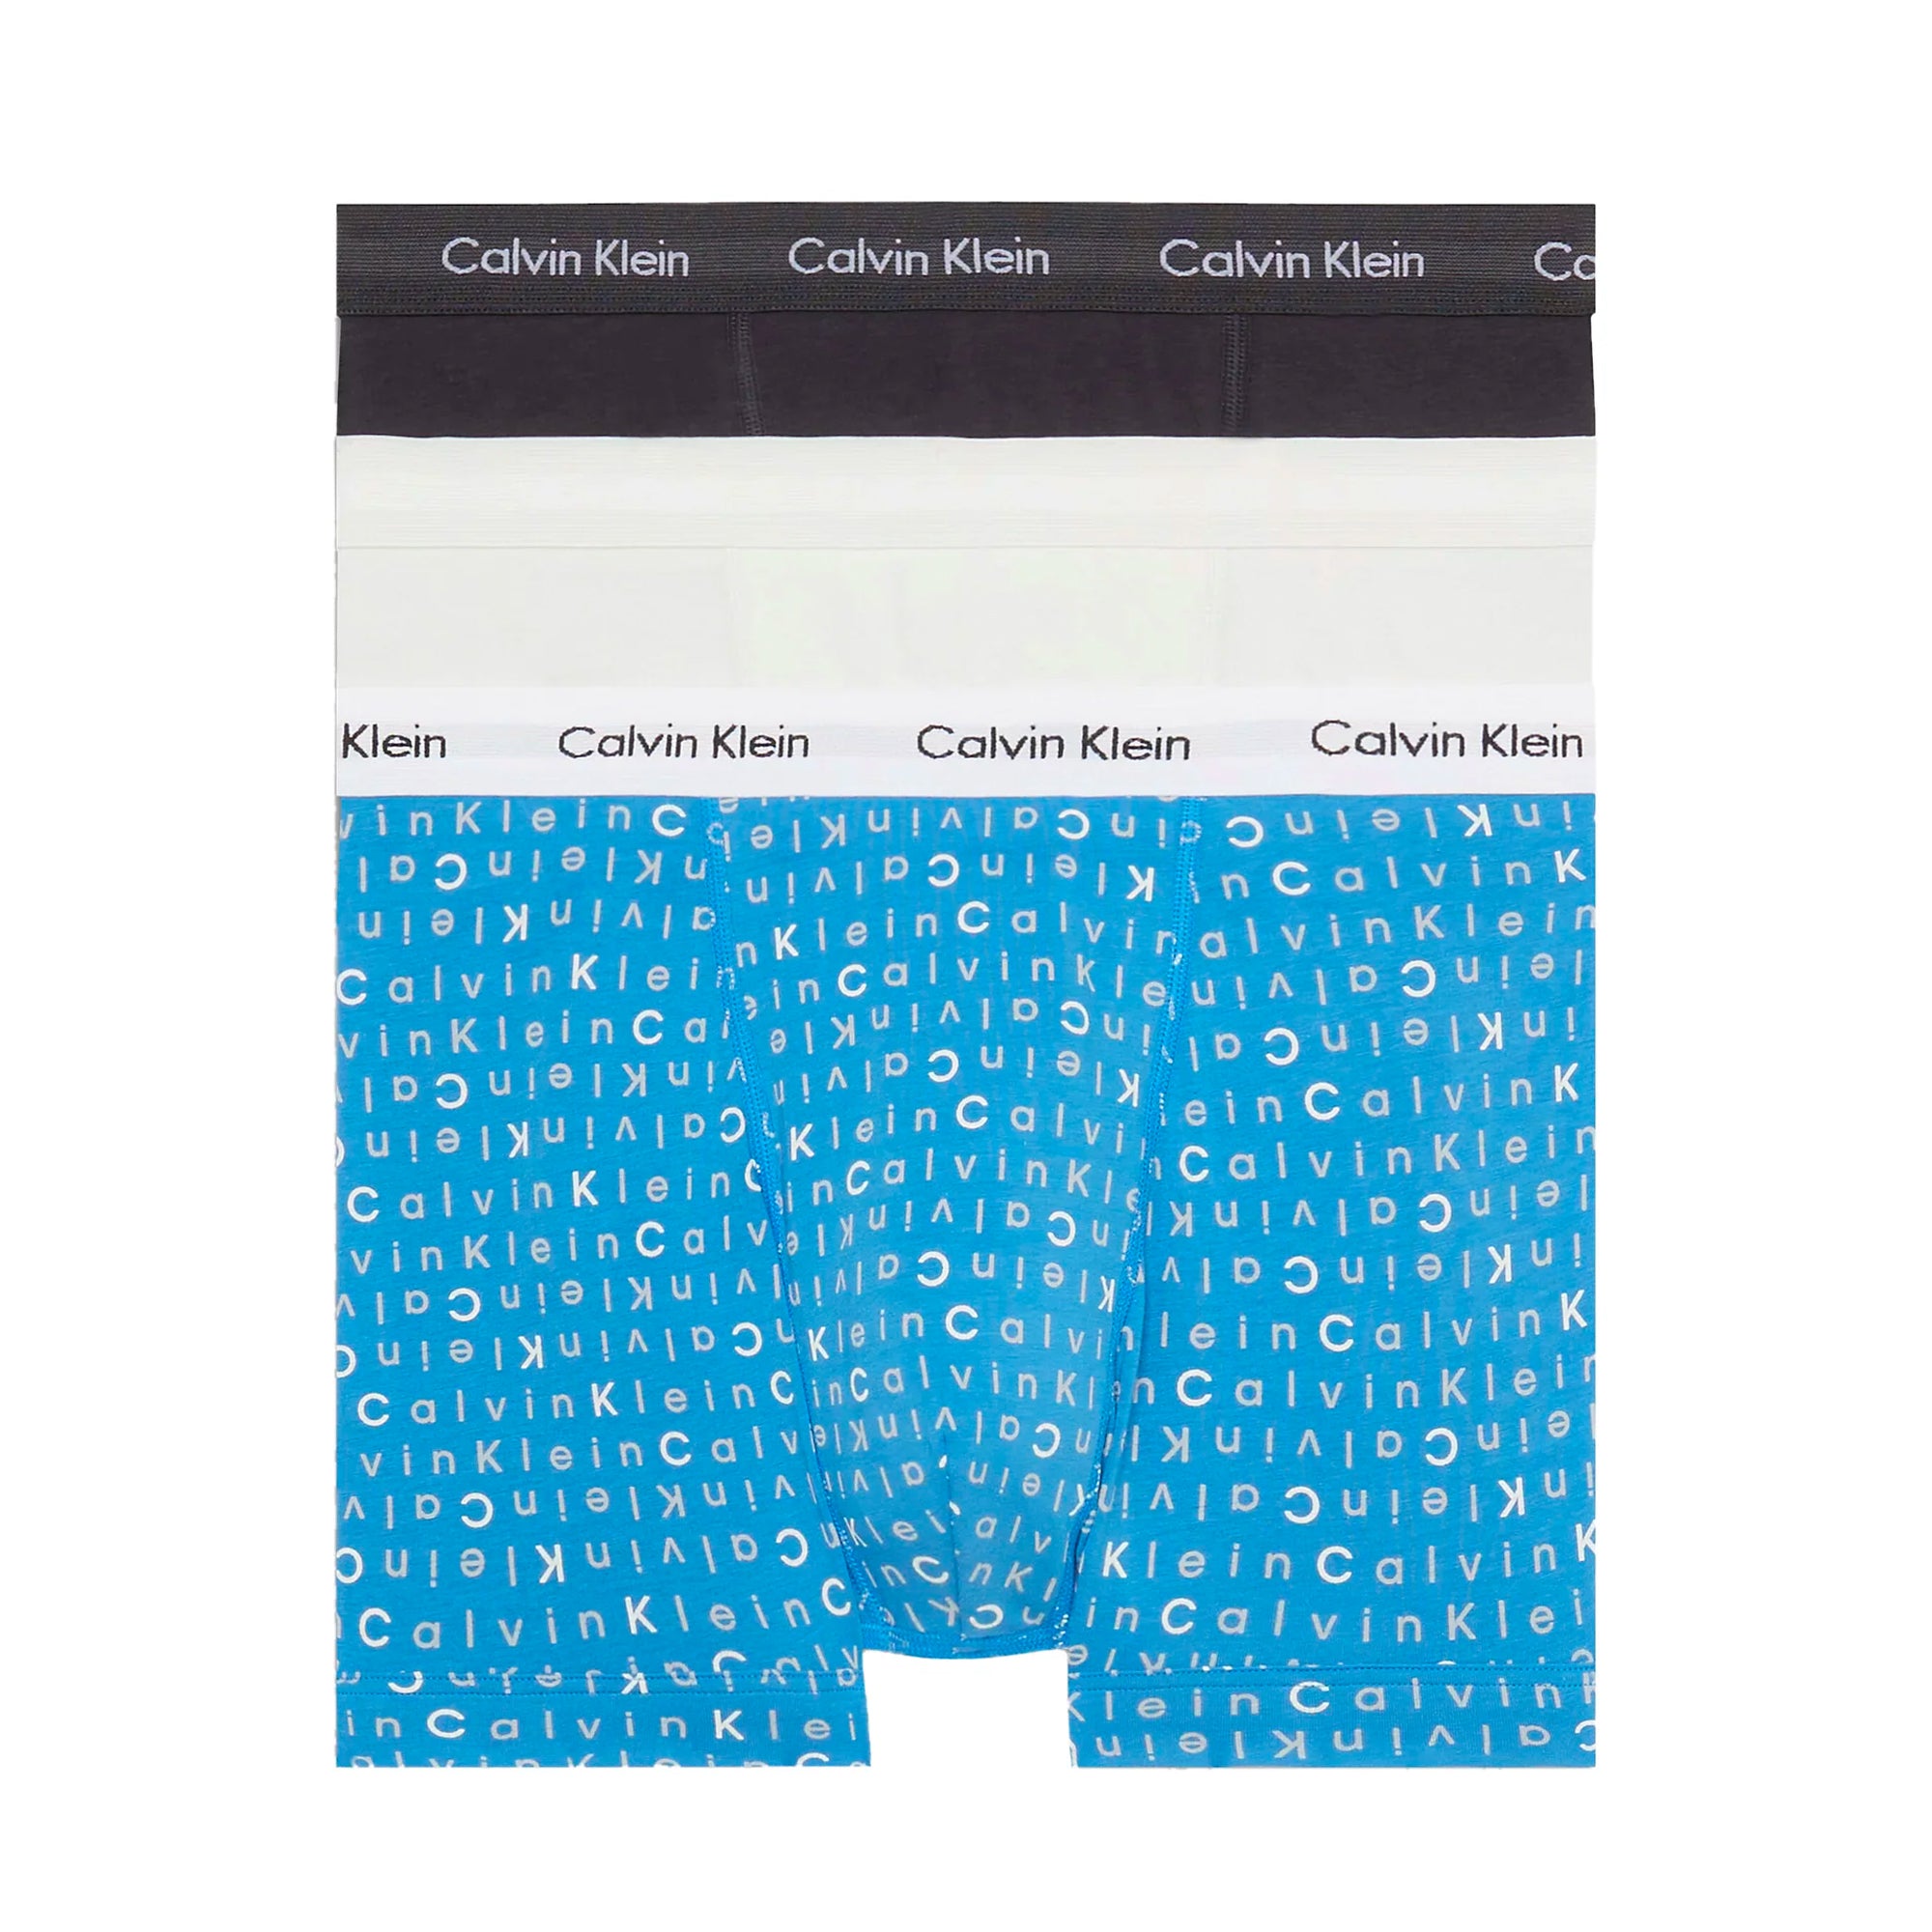 Calvin Klein Cotton Stretch Trunks - Phantom Grey/Vaporous Grey/Palace Blue